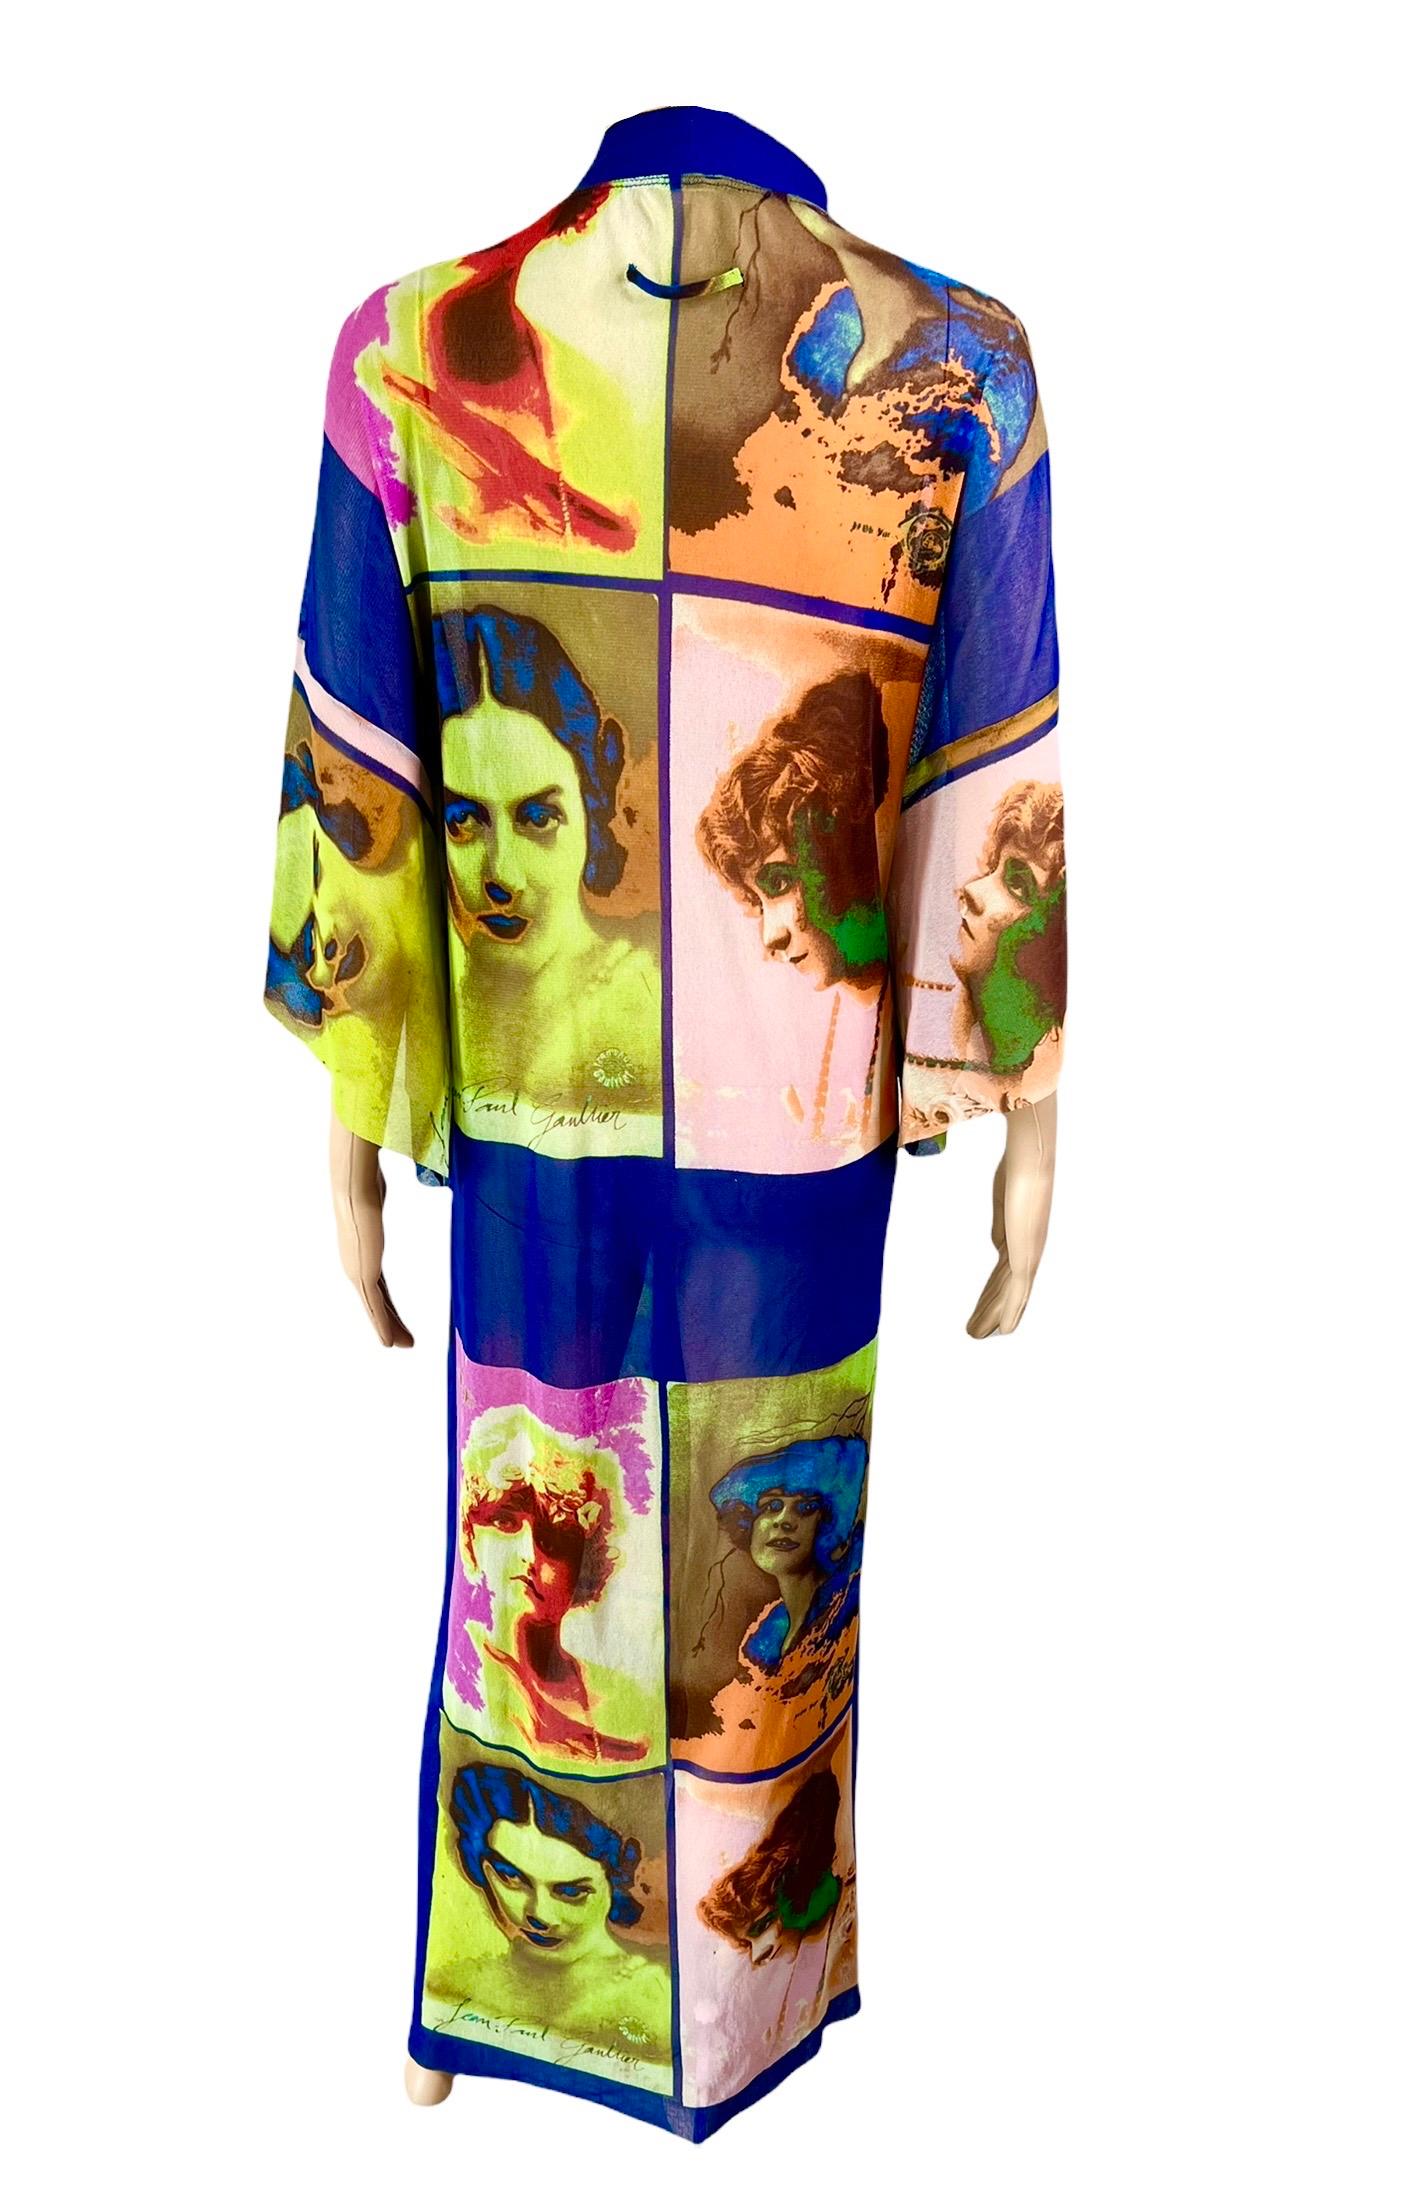 Jean Paul Gaultier Soleil S/S 2002 Vintage “Portraits” Mesh Maxi Dress Kimono In Good Condition For Sale In Naples, FL